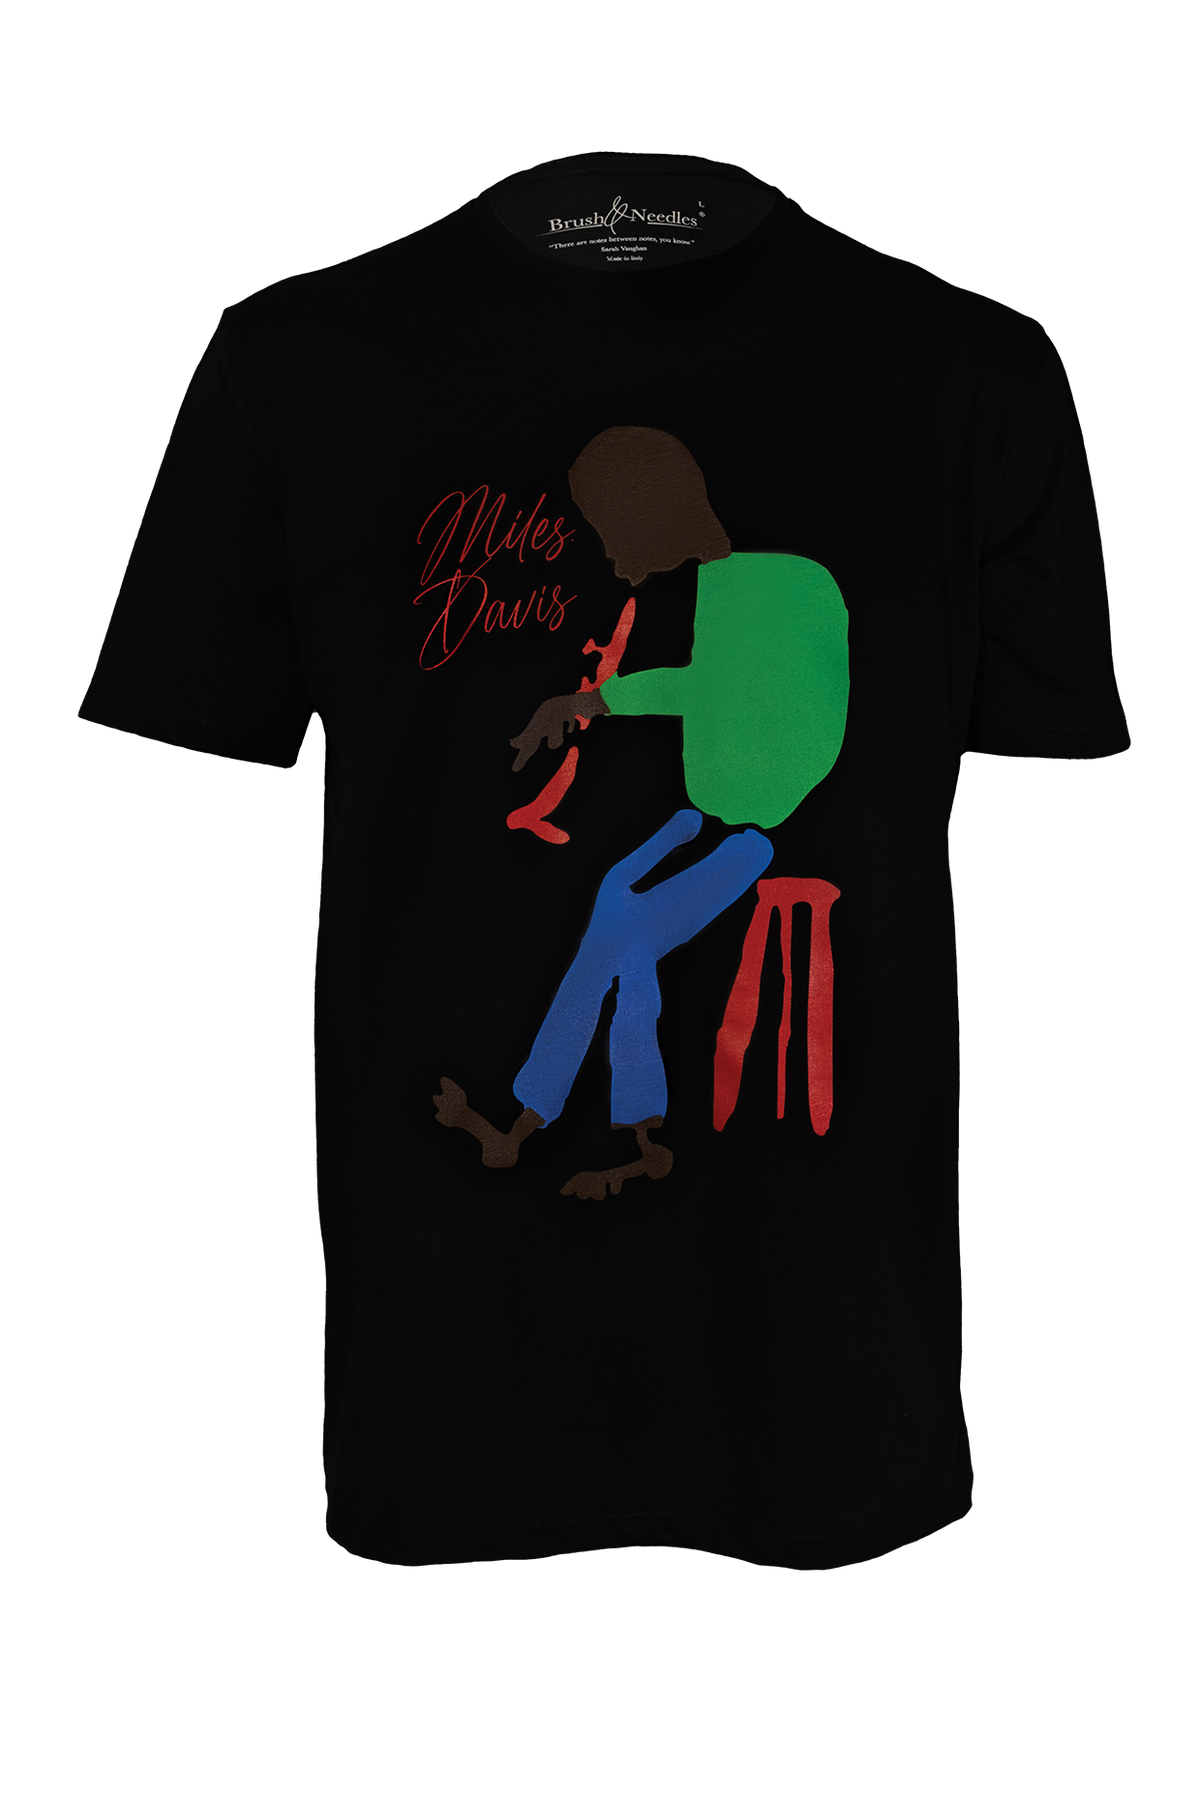 Miles Davis T-shirts